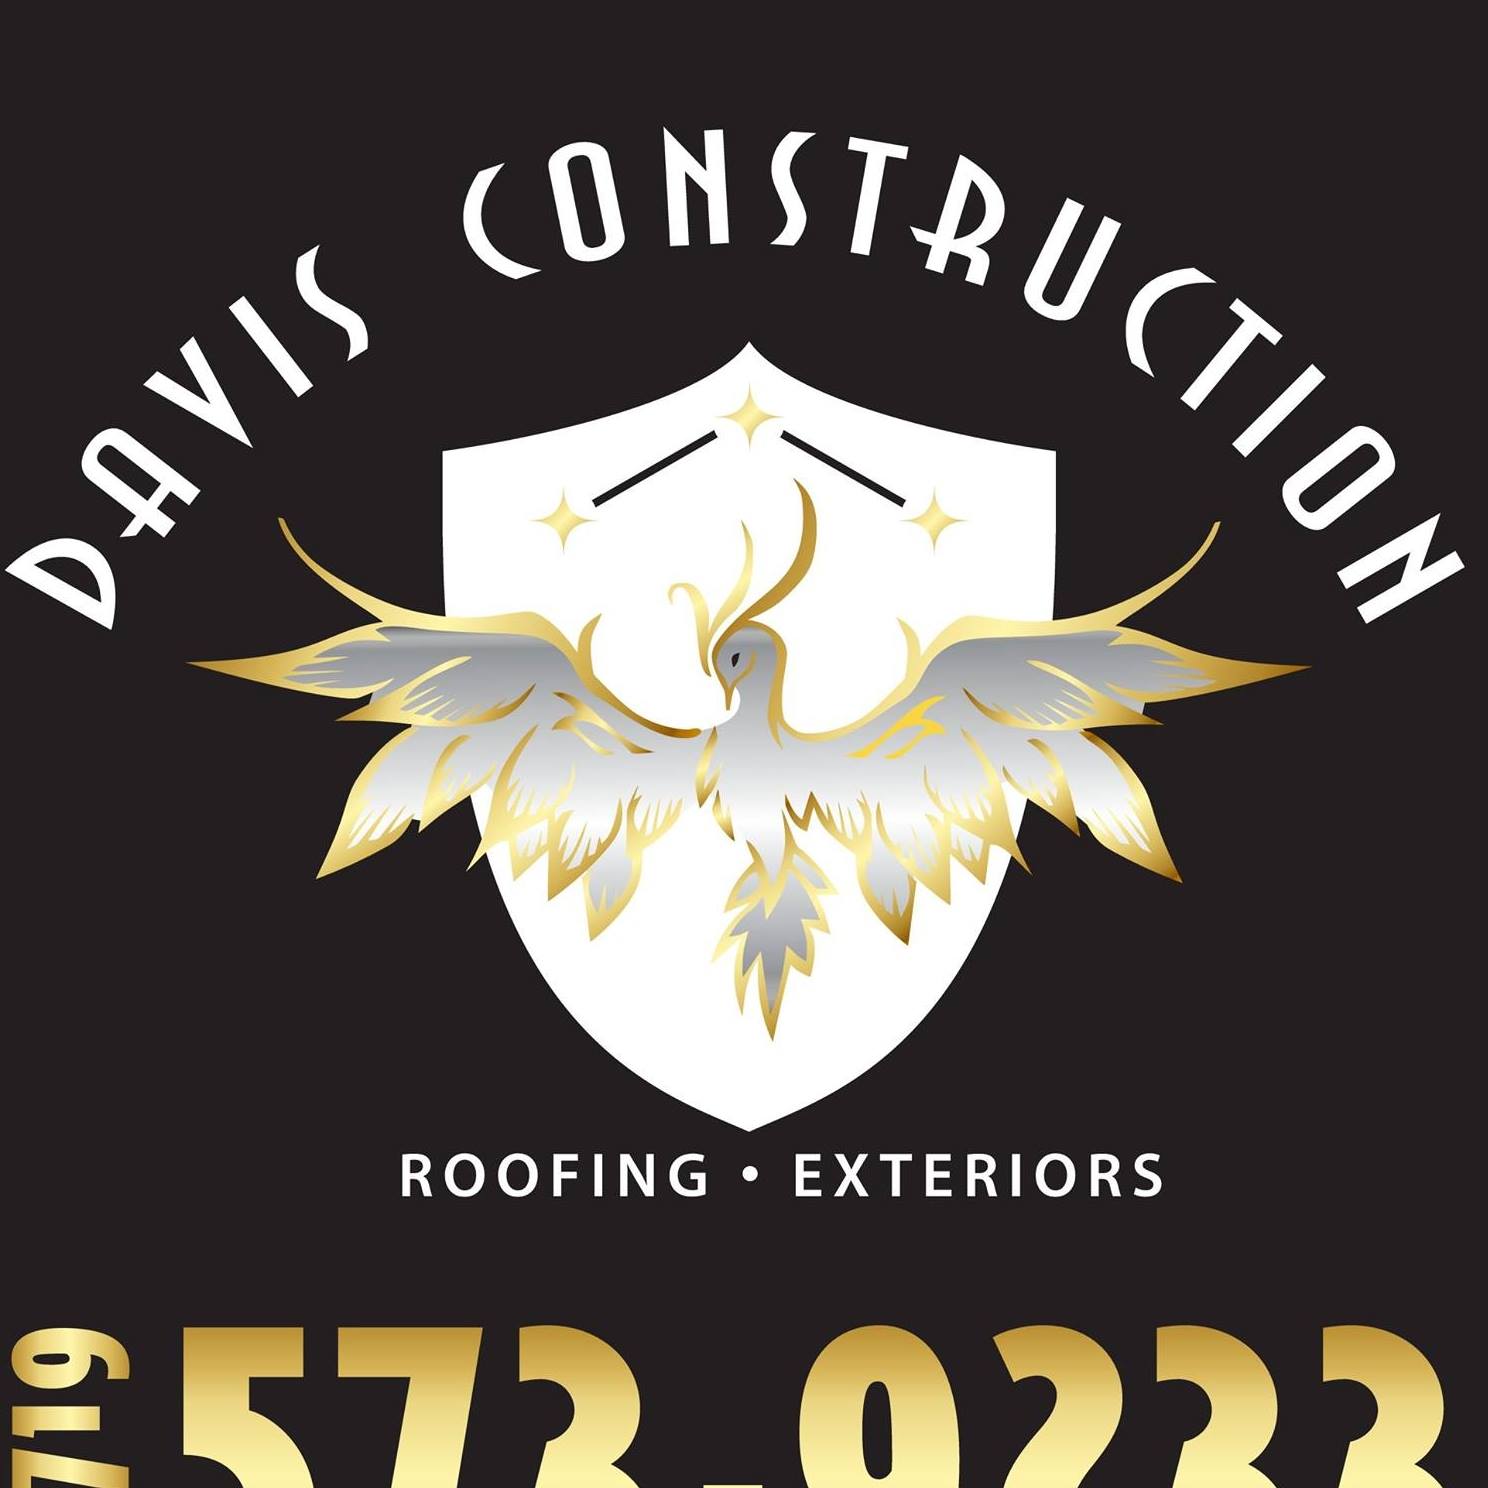 Company logo of Davis Construction Inc